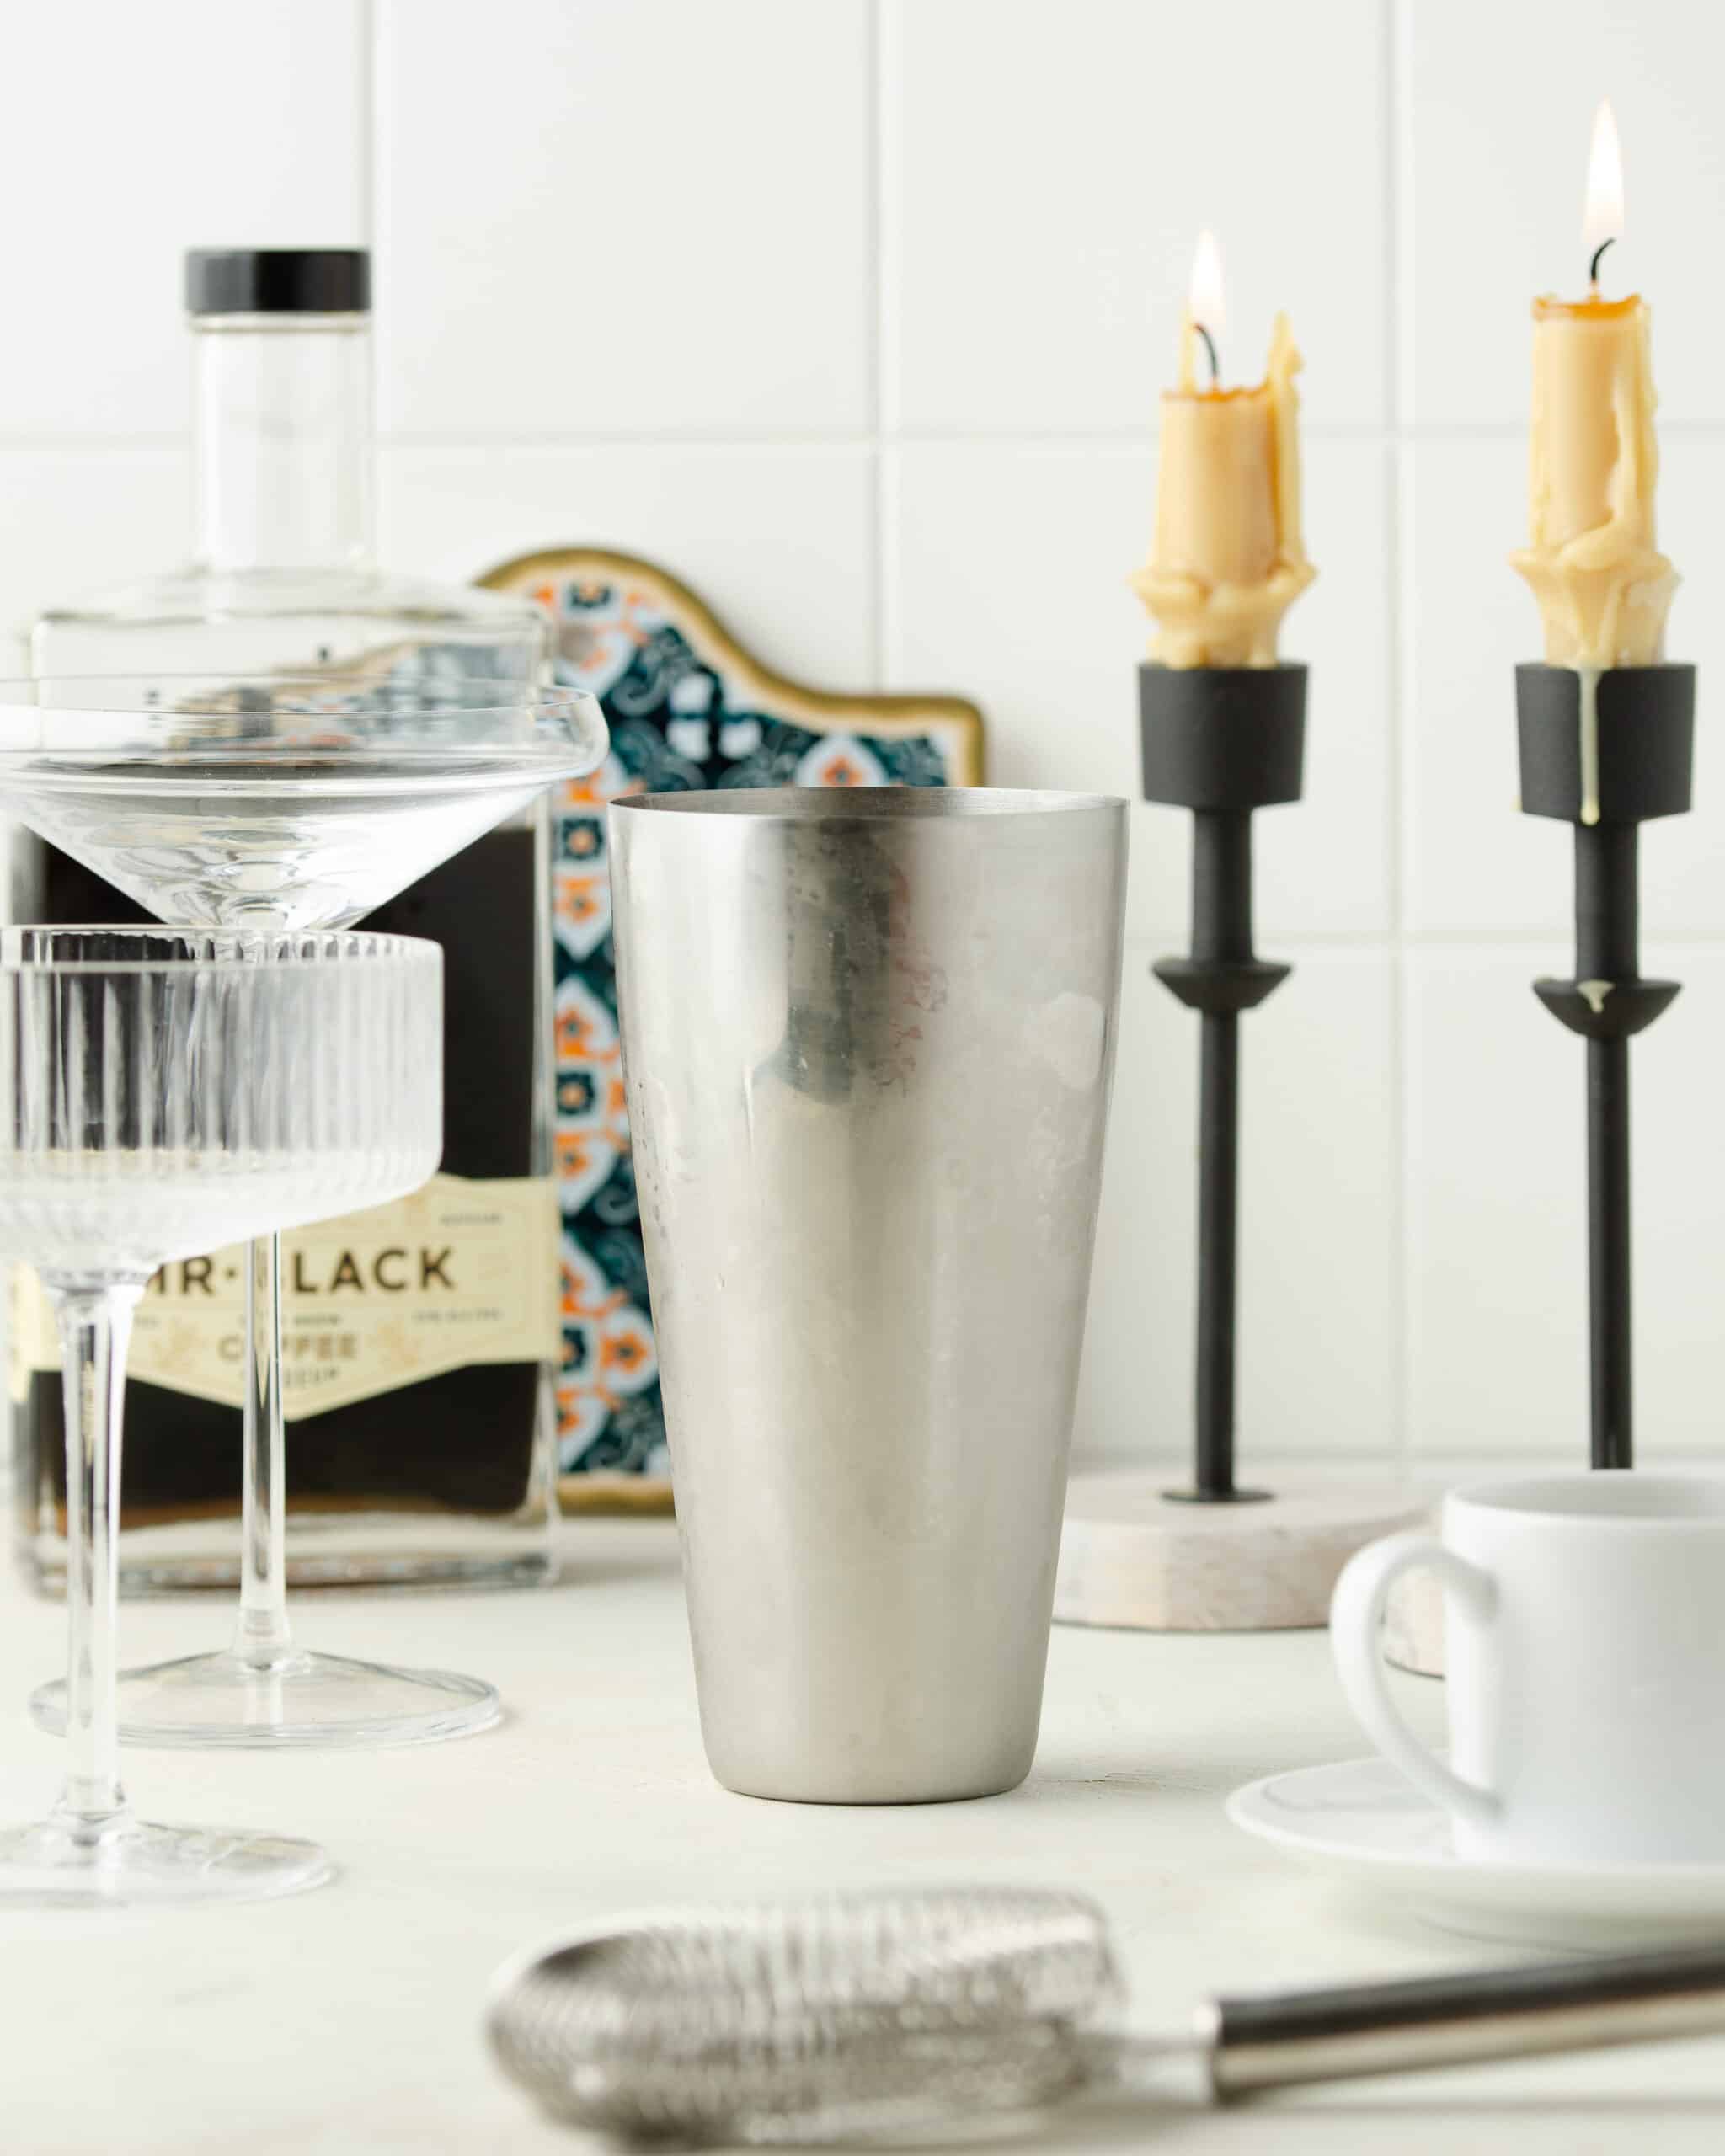 Espresso martini in a cocktail shaker on the kitchen counter.